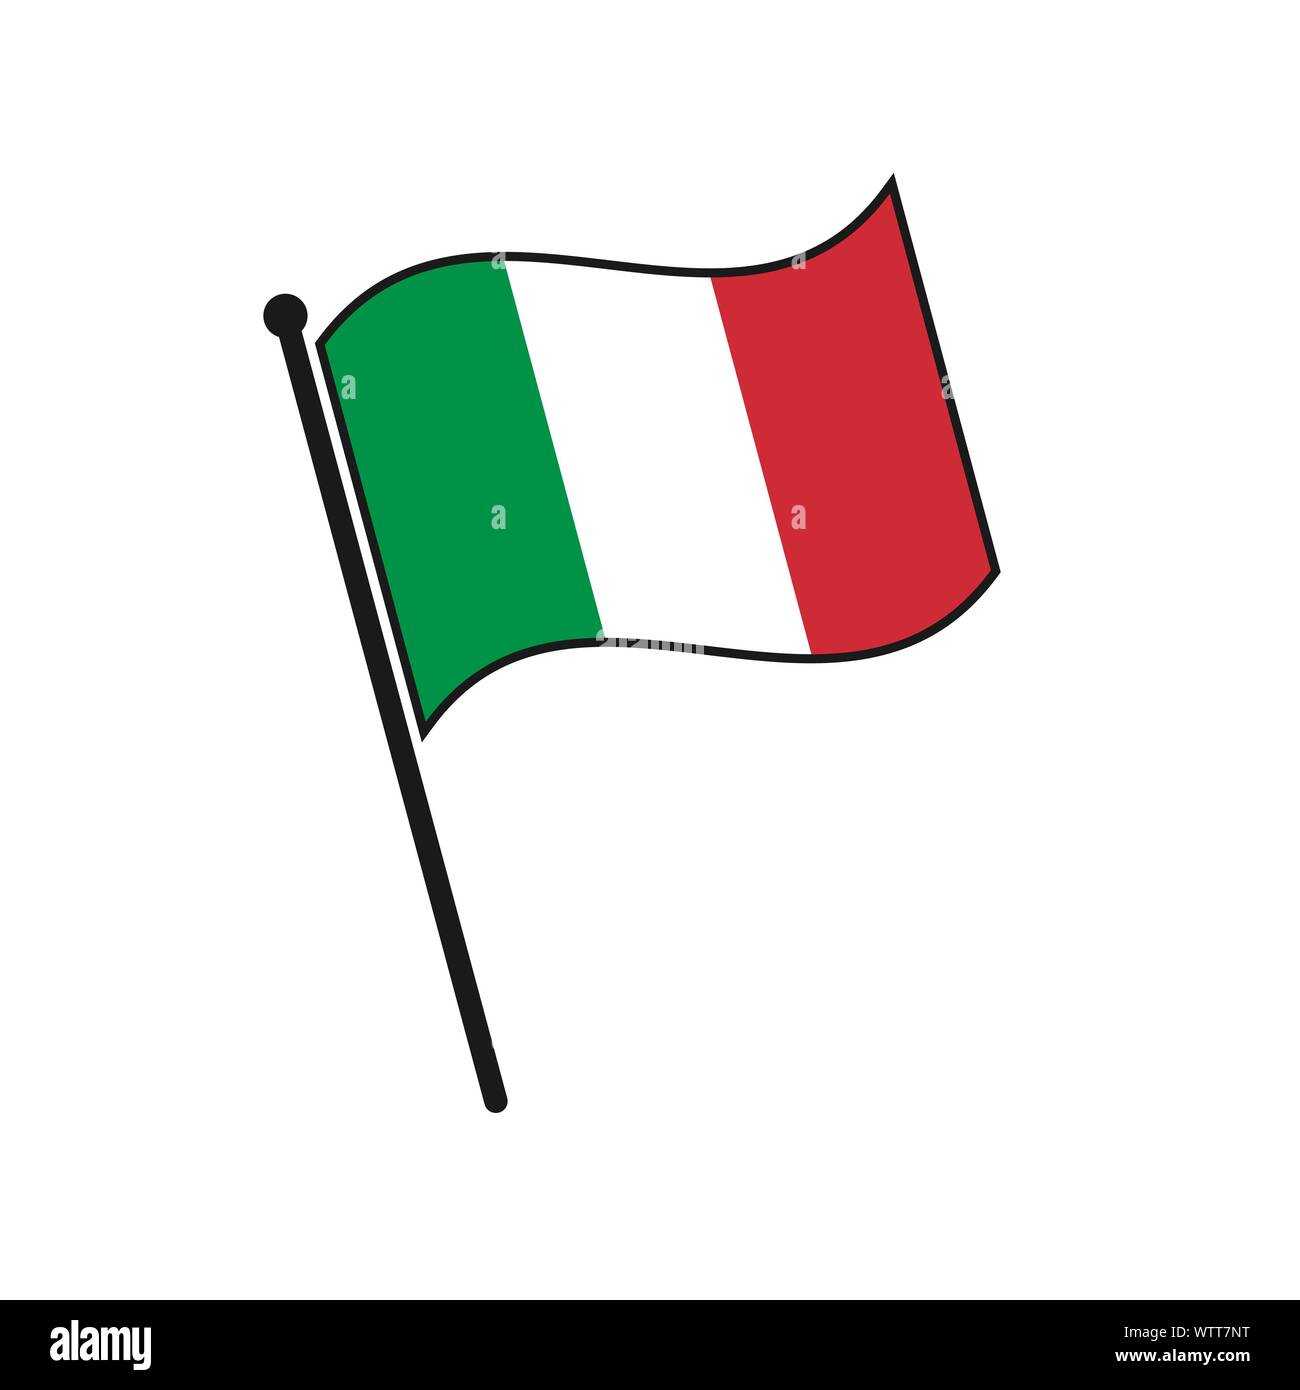 Aufkleber Streifen runde Schild Flagge Italien Tricolore Italien